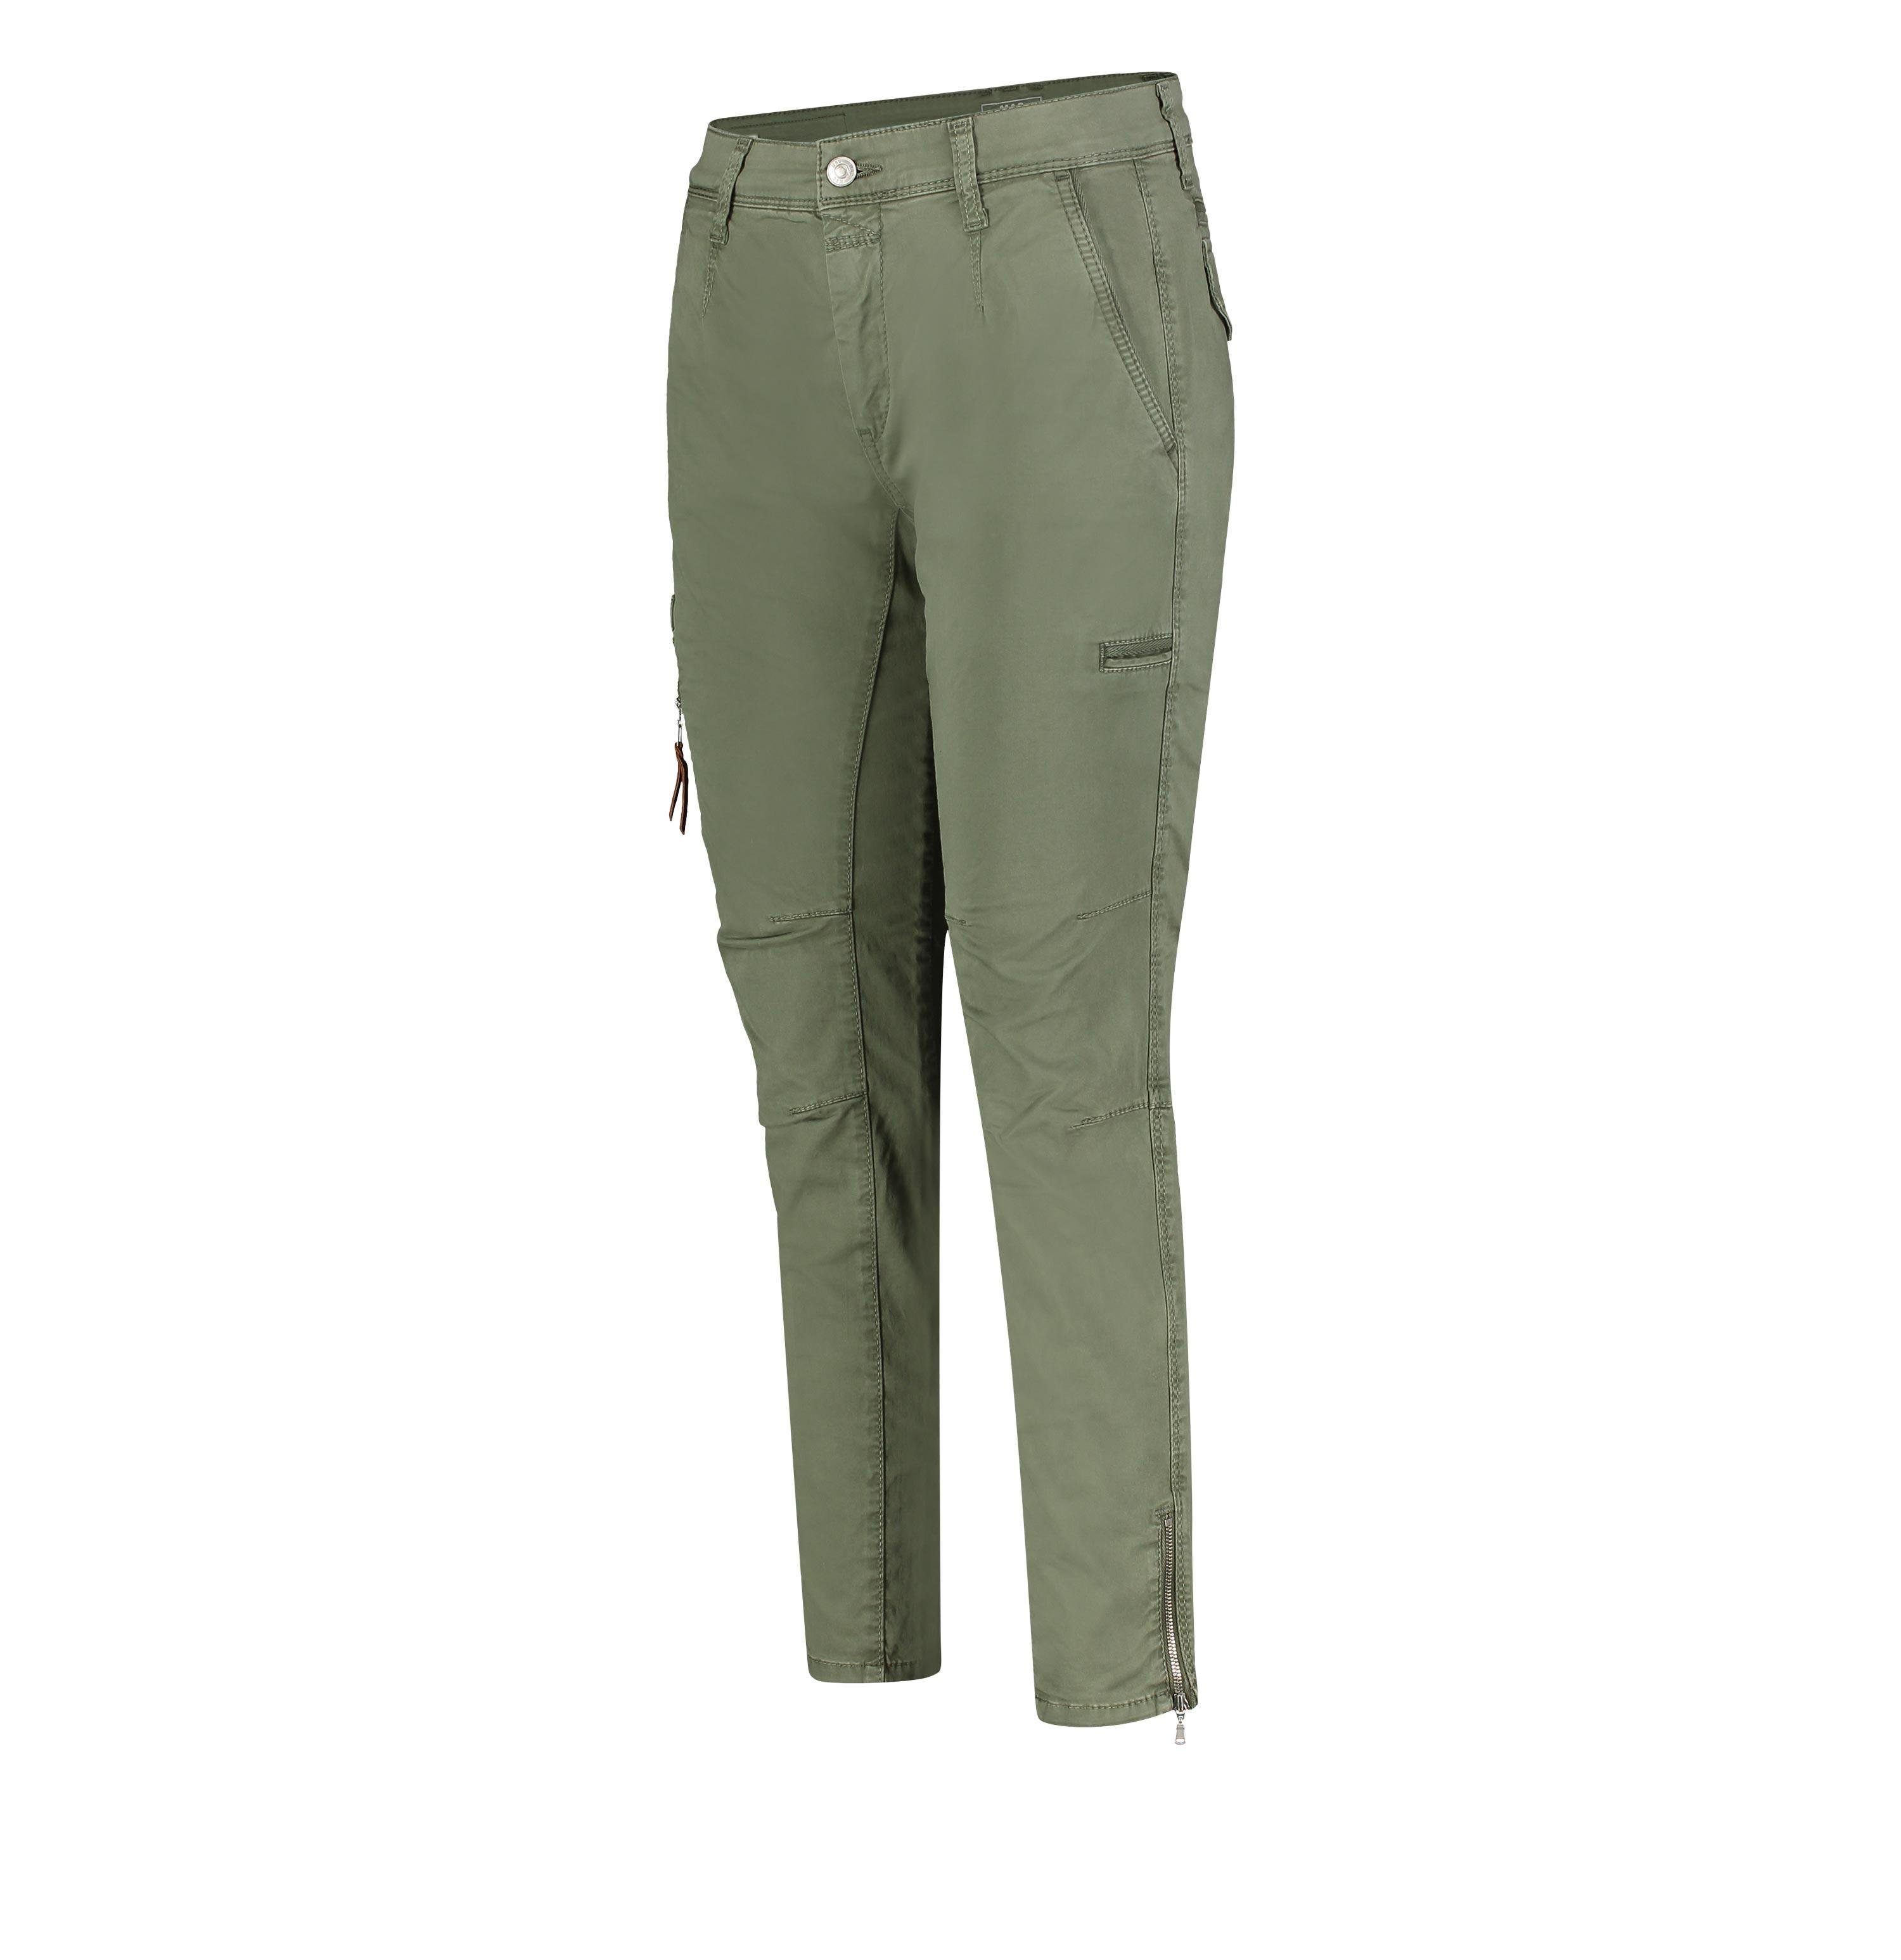 MAC Stretch-Jeans MAC green 2377-00-0430L light PPT 645R RICH summer